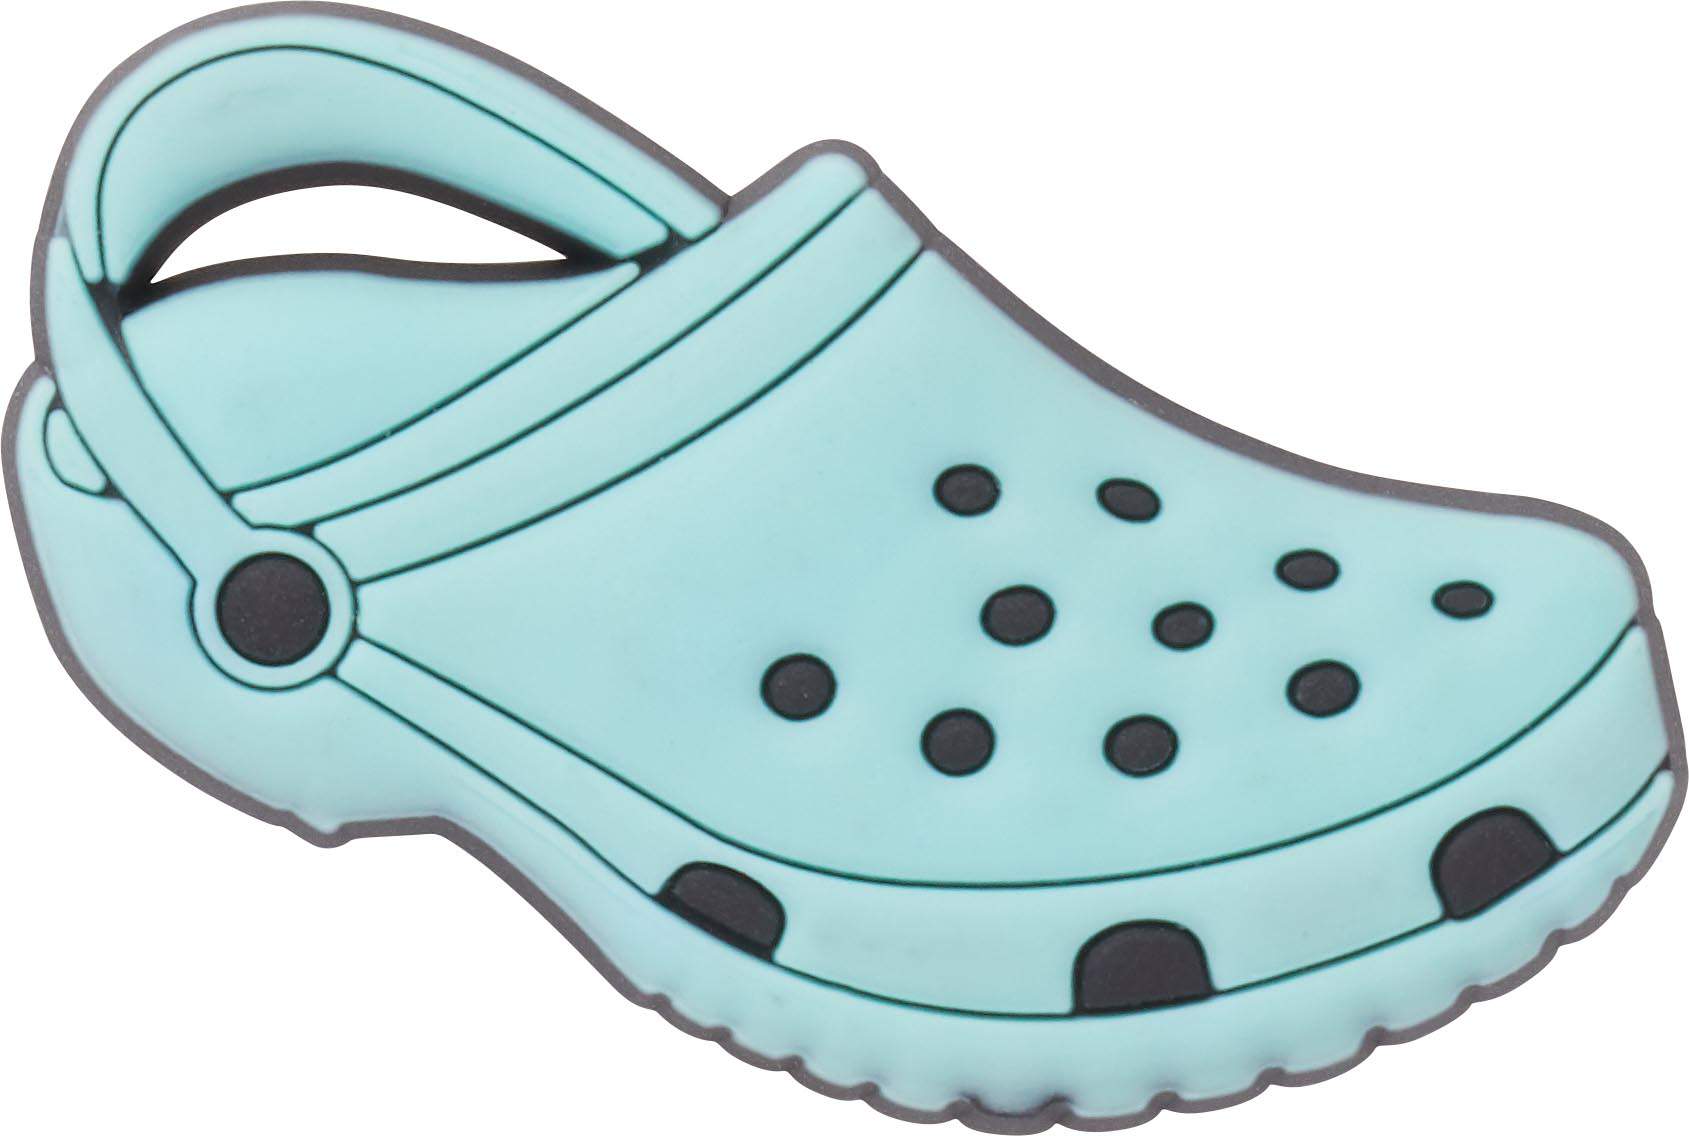 ice blue crocs size 8